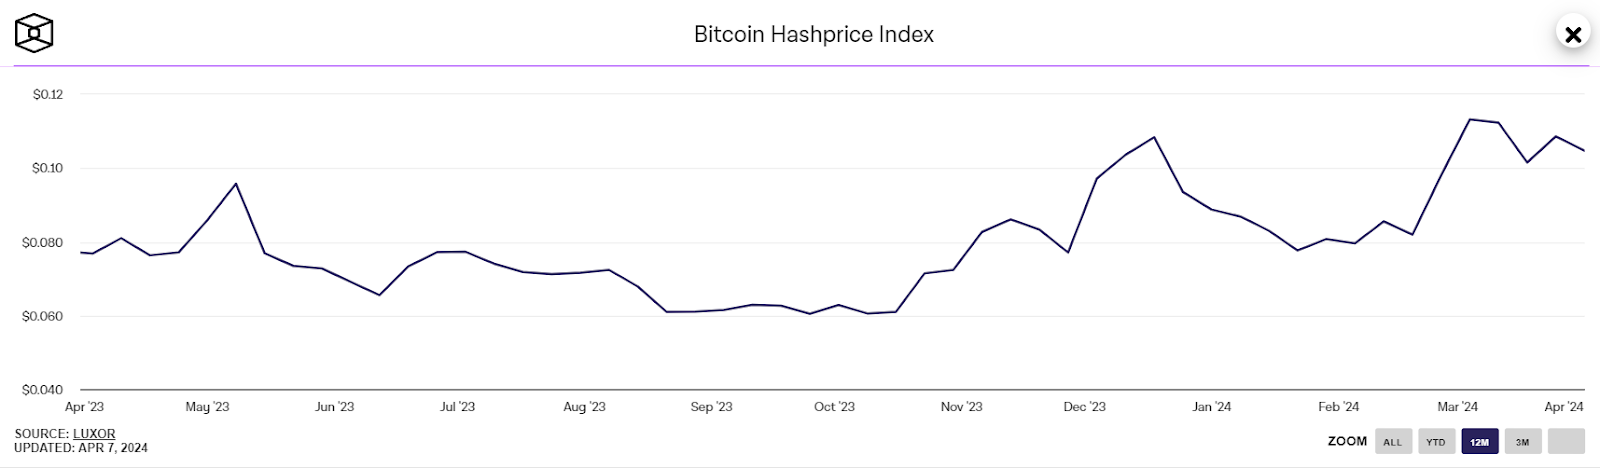 Bitcoin hashrate index